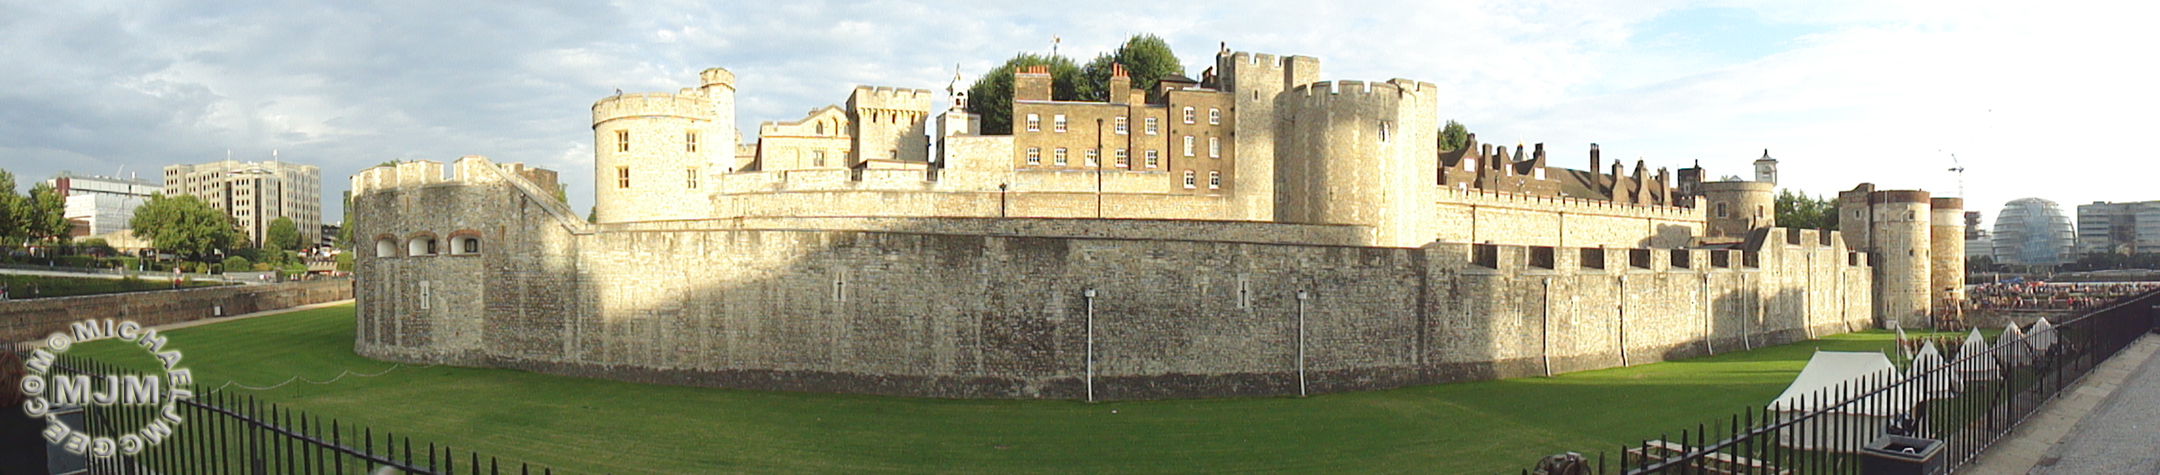 Tower of London / michaeljmcgee.com